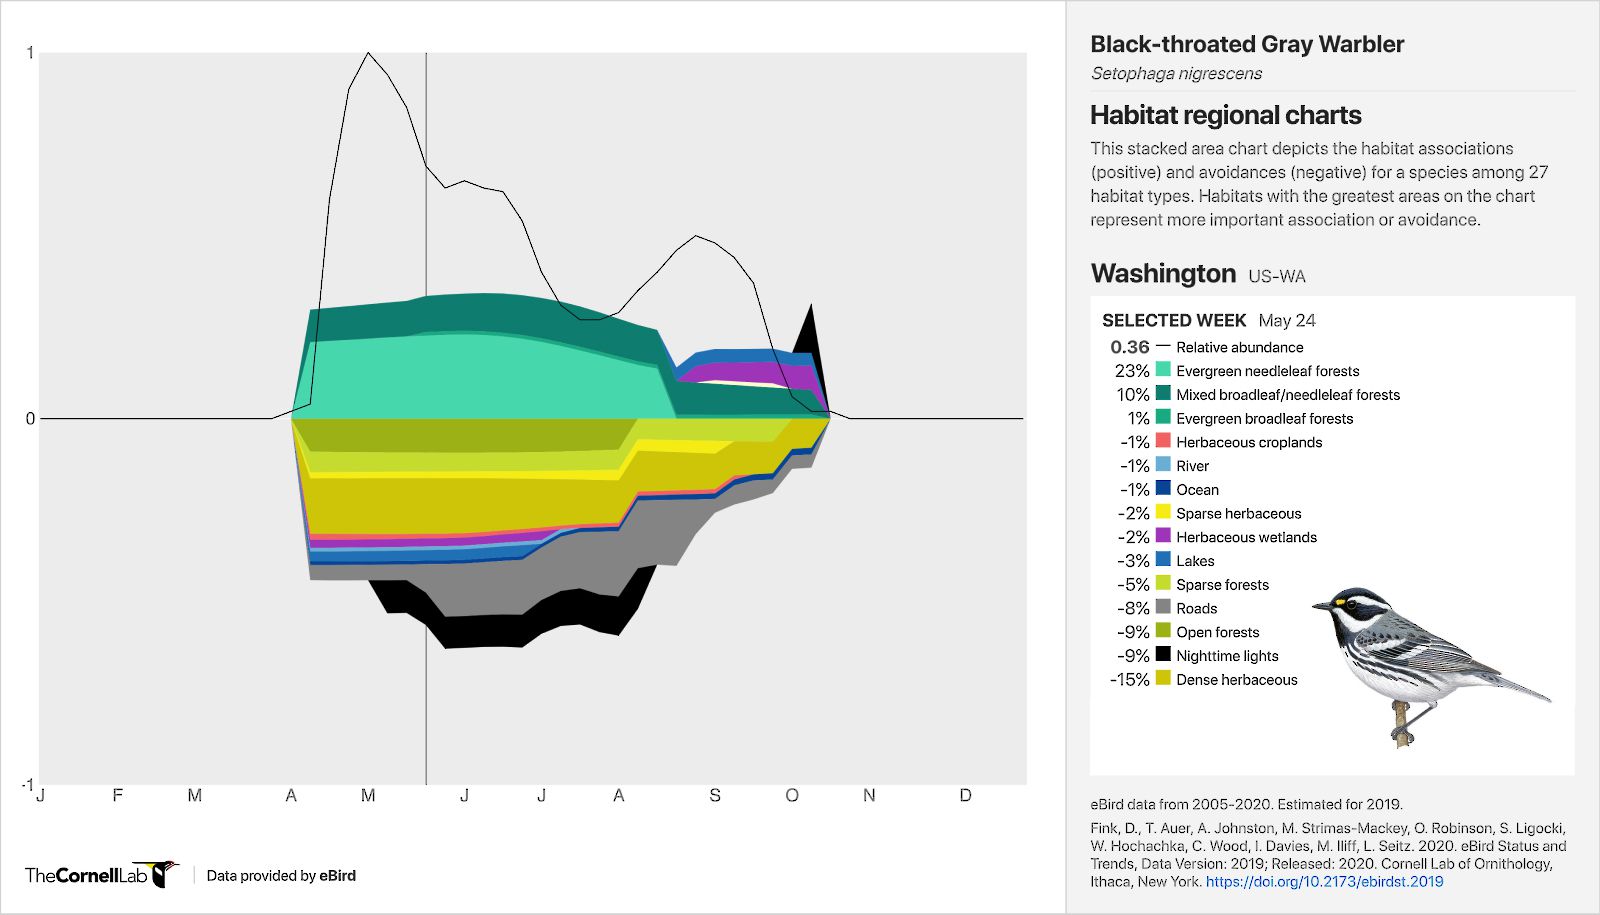 Habitat regional chart for Black-throated Gray Warbler in Washington